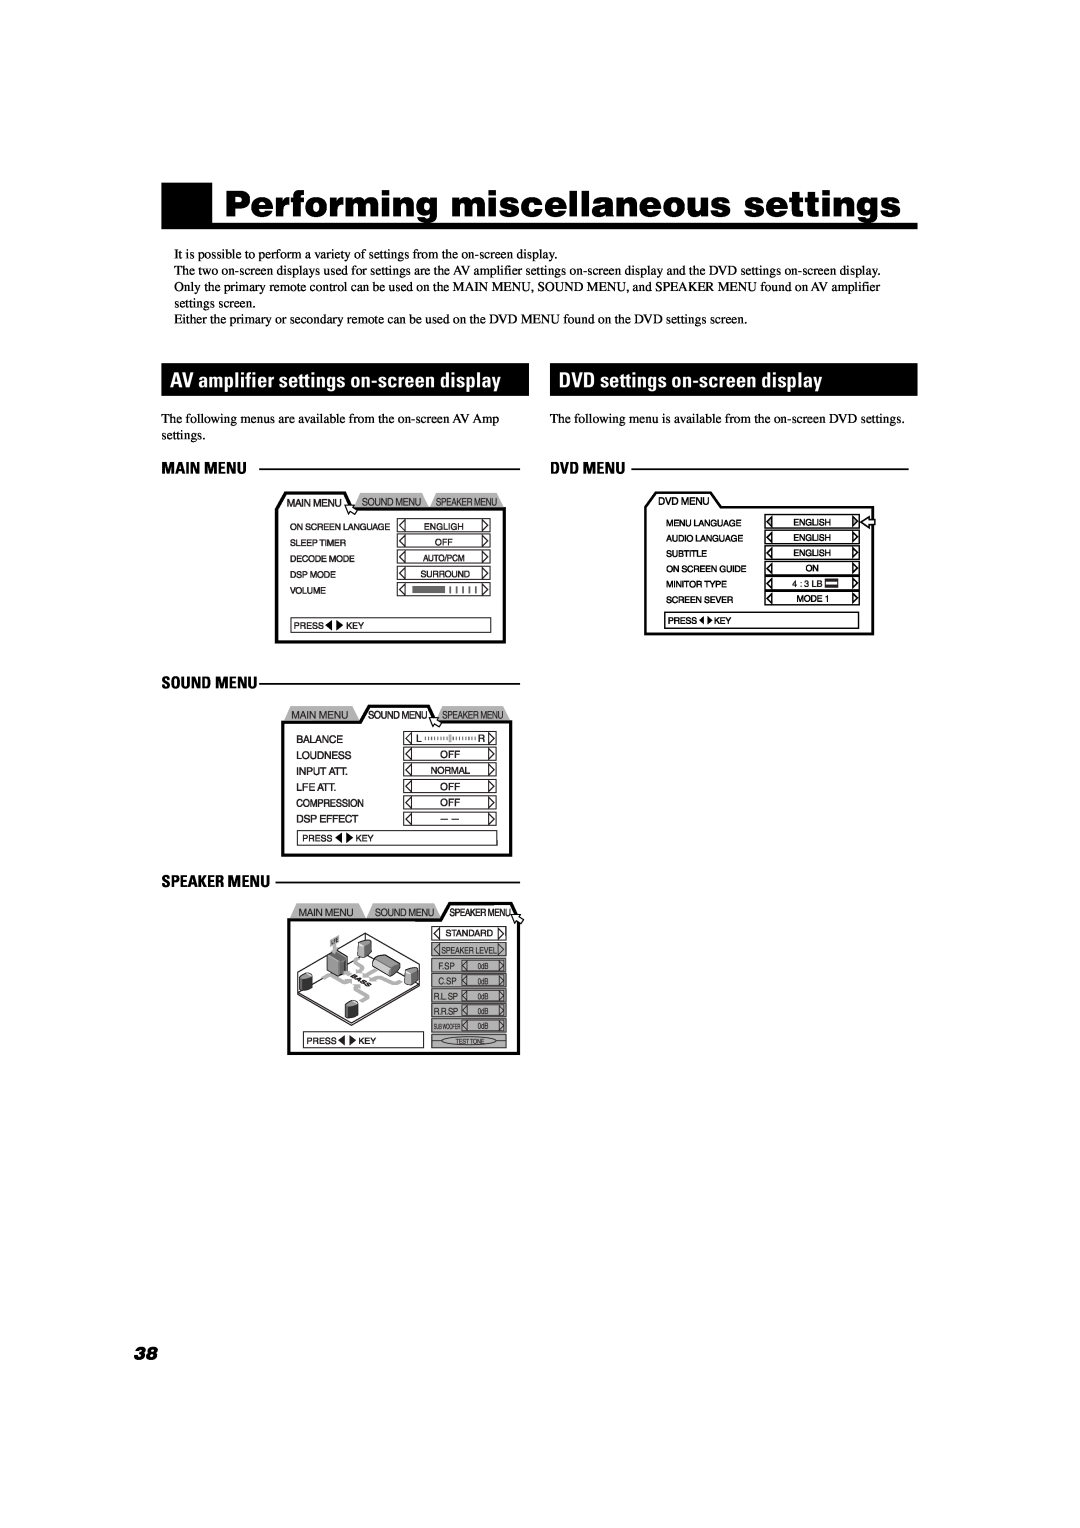 JVC TH-A104 manual Performing miscellaneous settings, DVD settings on-screendisplay, AV amplifier settings on-screendisplay 